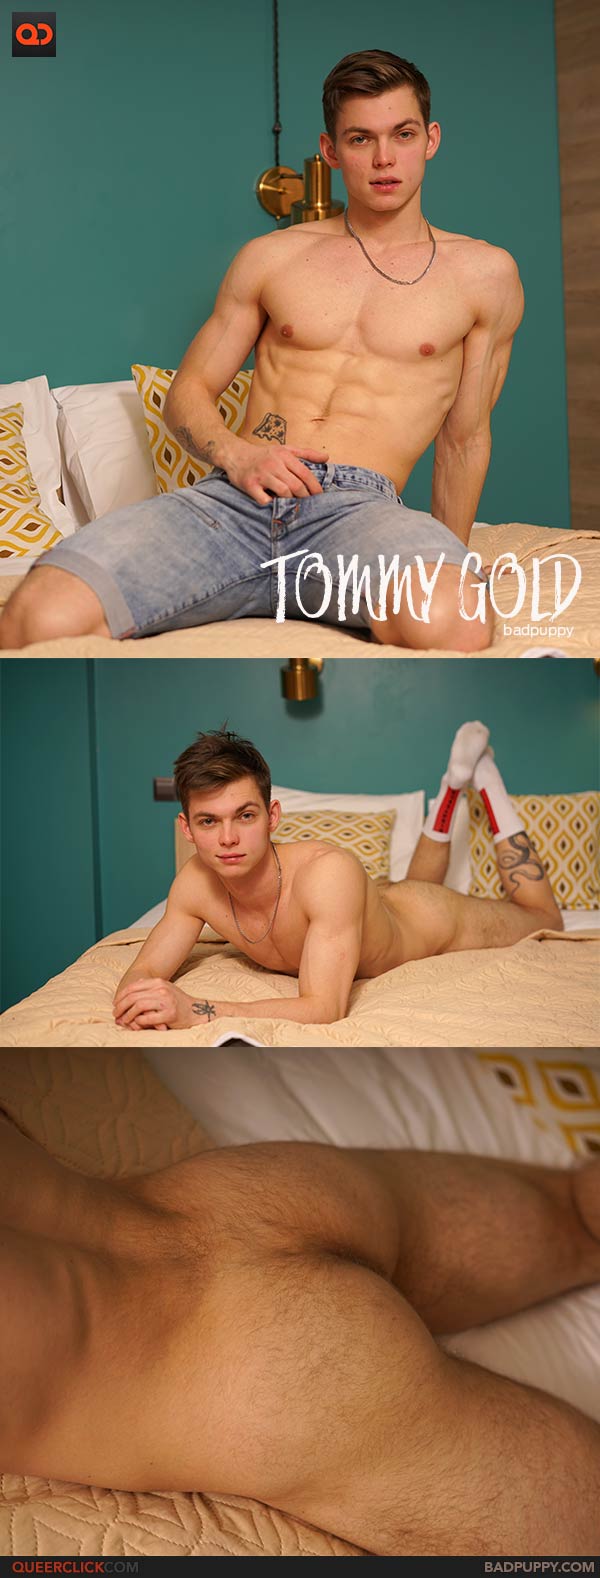 BadPuppy: Tommy Gold